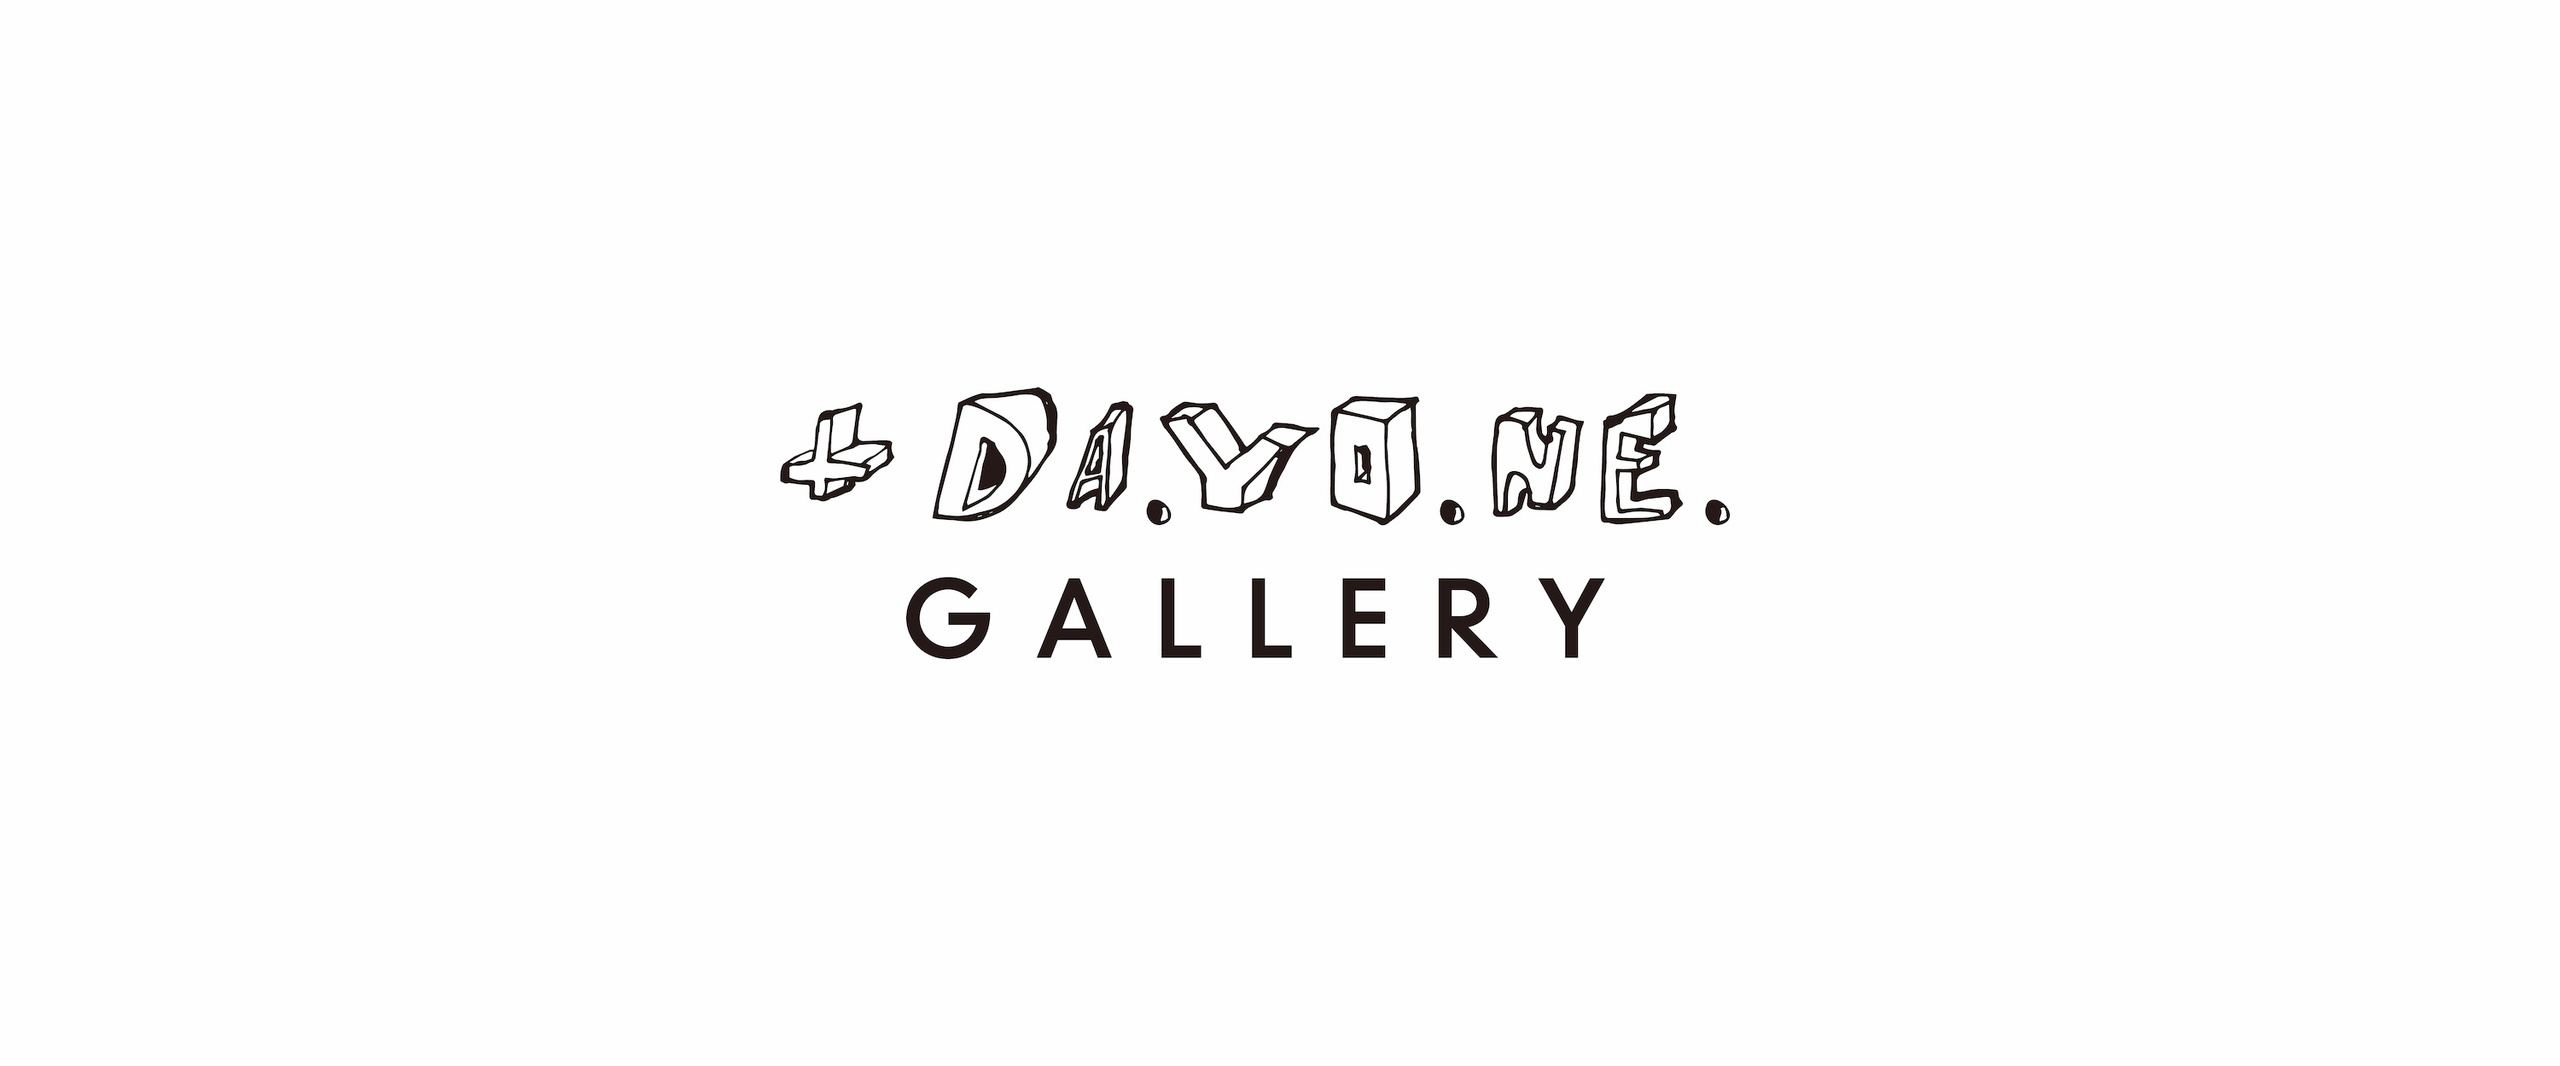 3dayone_gallery_logo.jpg